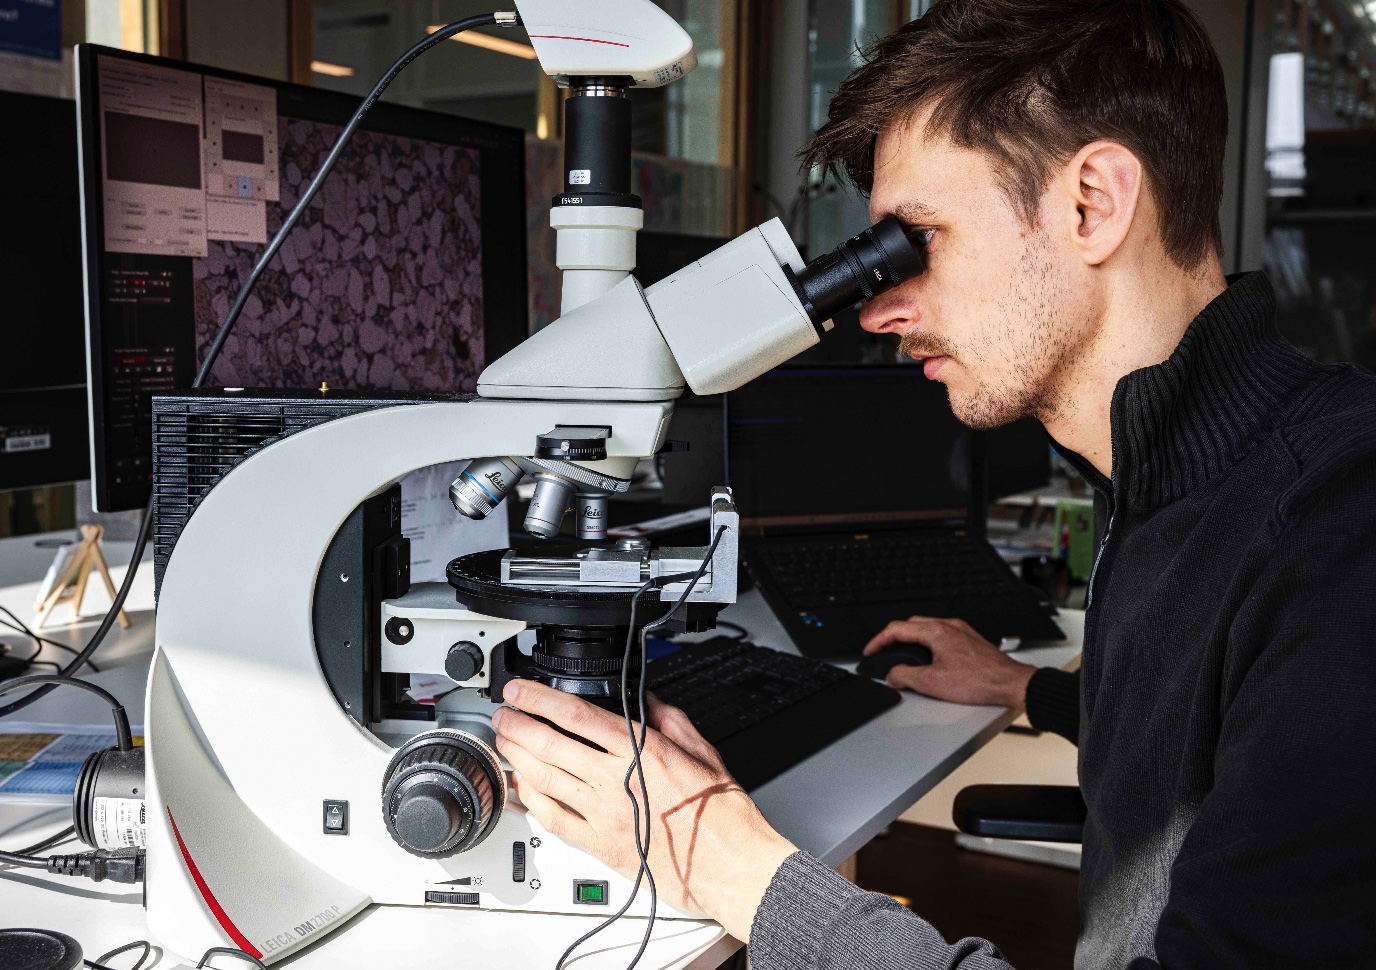 Sebastian Mulder, PhD, onderzoekt de blootgestelde mudstone onder de microscoopSebastian Mulder, PhD, checking exposed mud stone sampels under the microscope